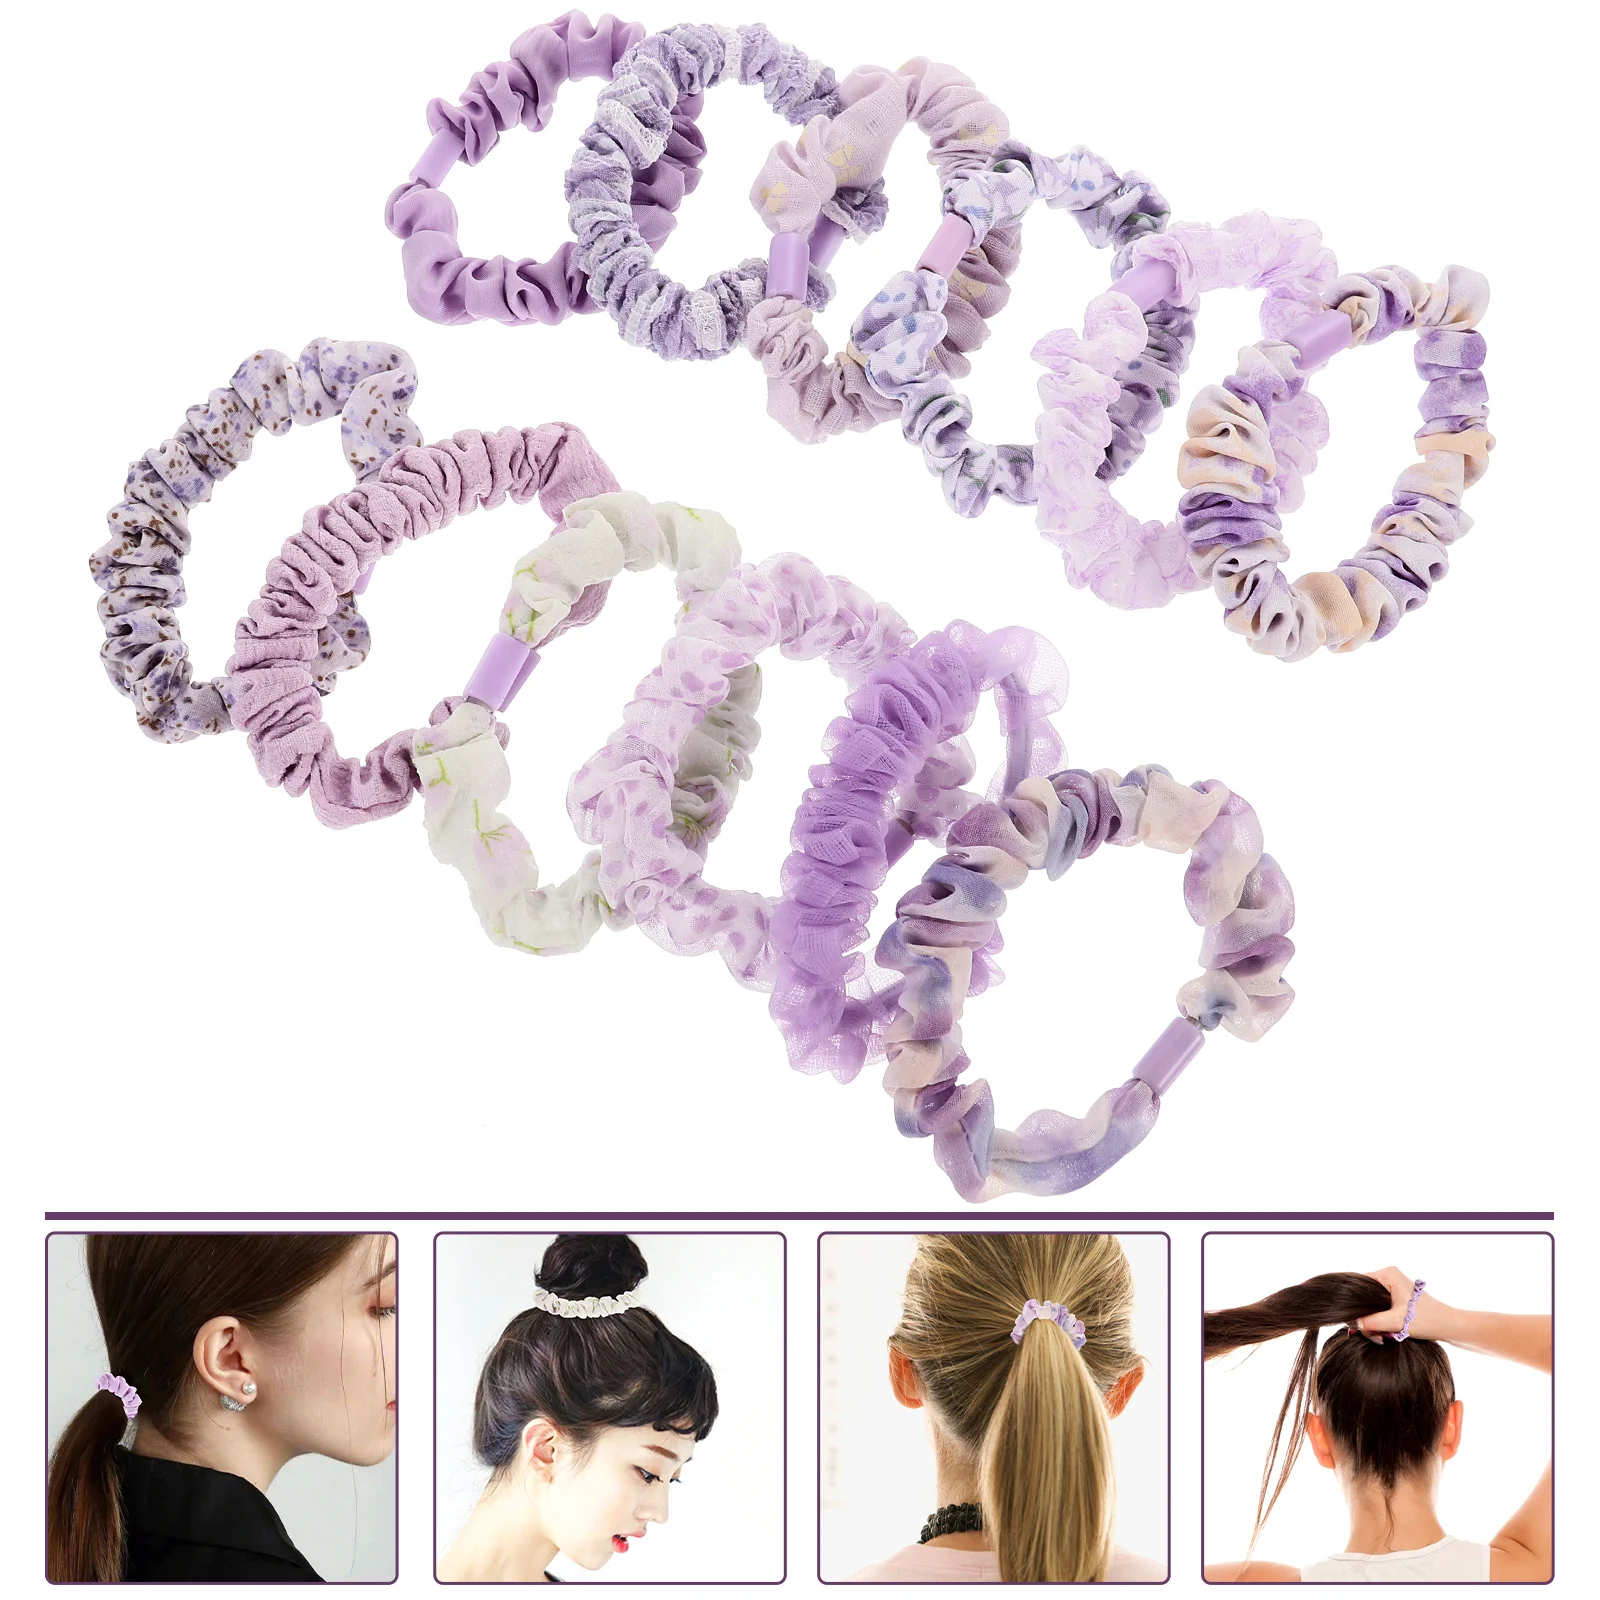 

Broken Flower Large Intestine Hair Ties Scrunchies Girls Elastic Stretchy Women Bands For Ponytail Holder Holders